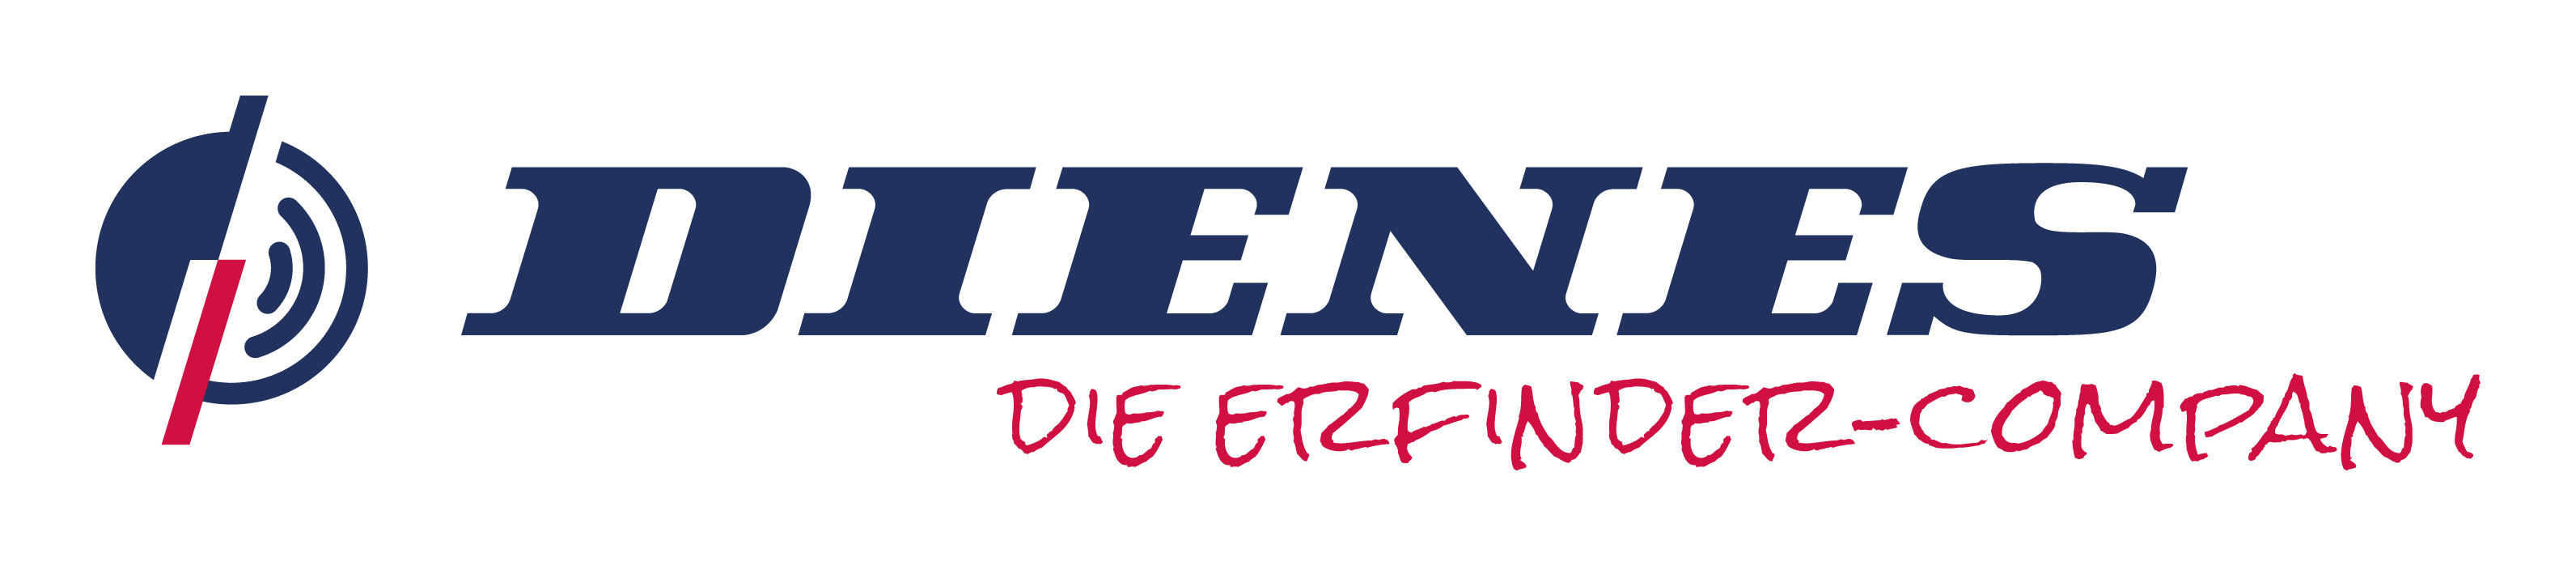 Dienes_Logo-und-Claim-RGB.png